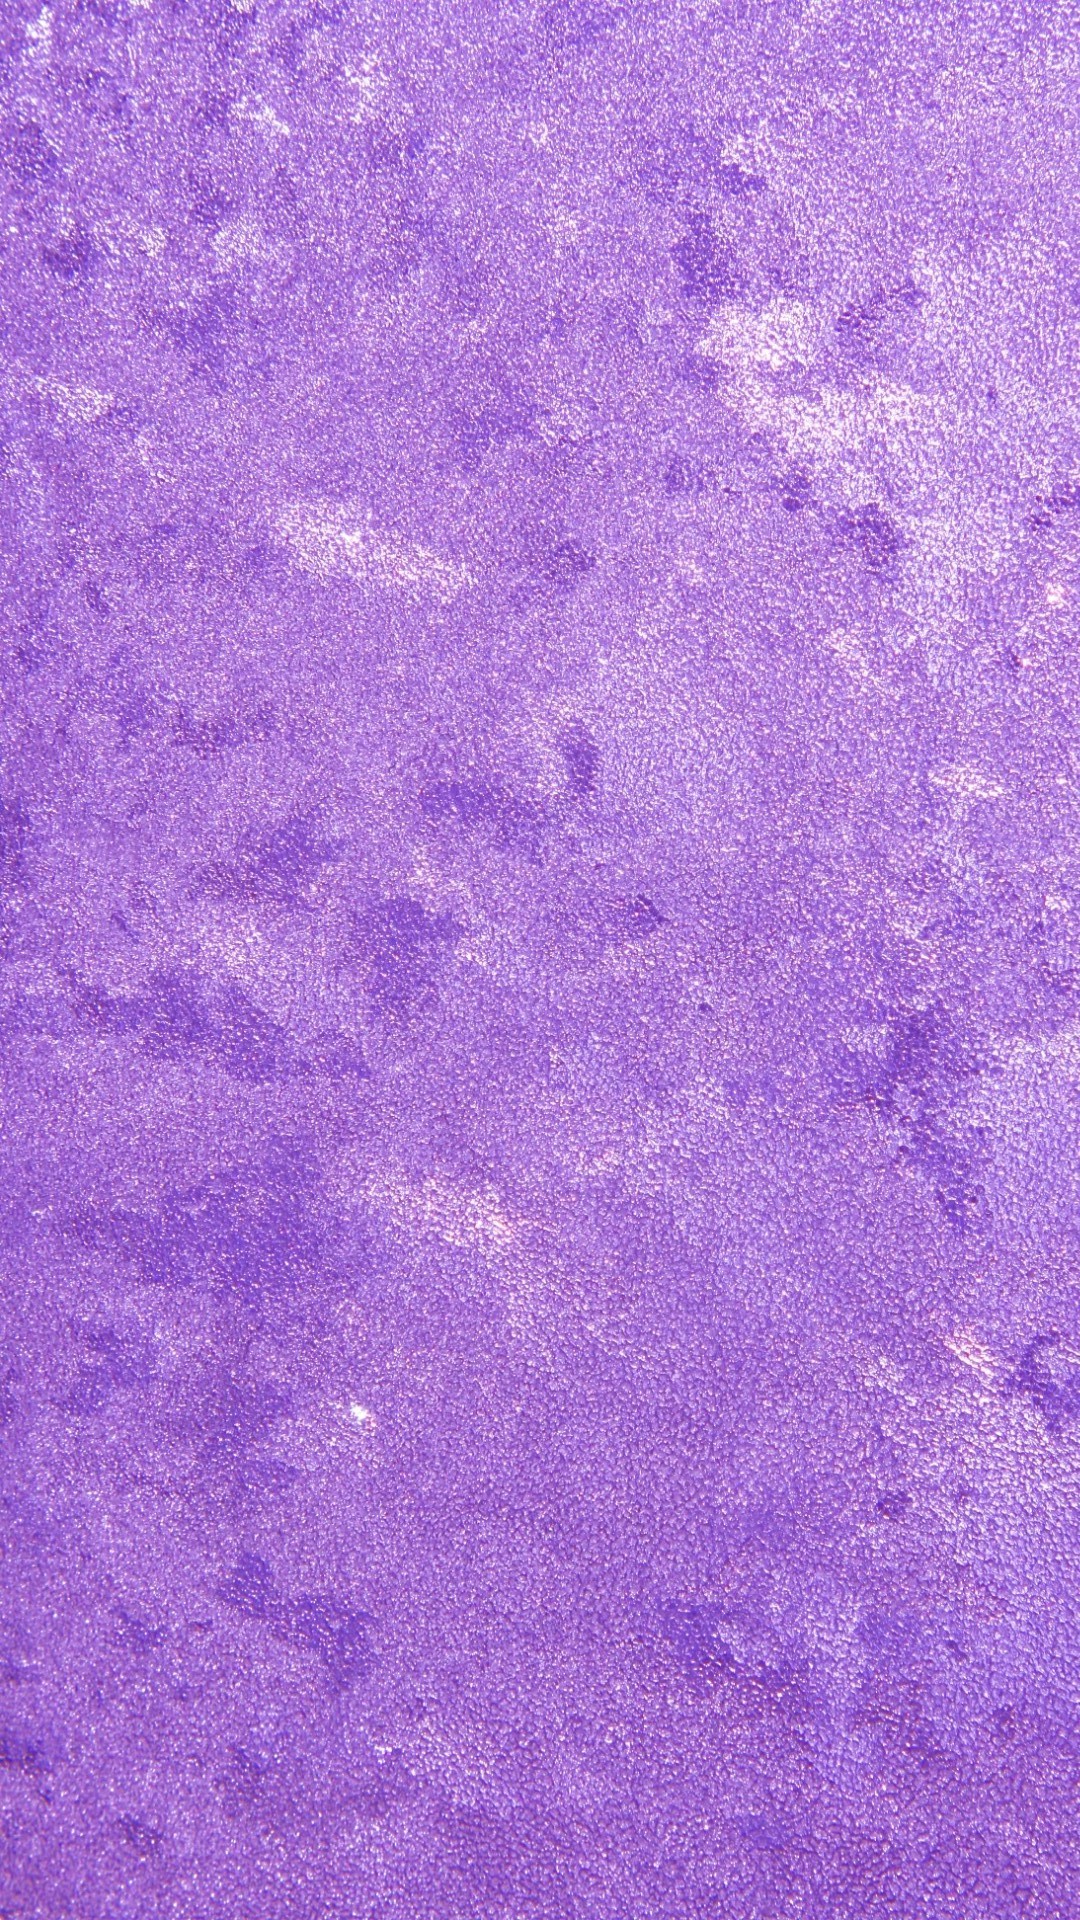 Close up Purple Texture iPhone Wallpaper resolution 1080x1920